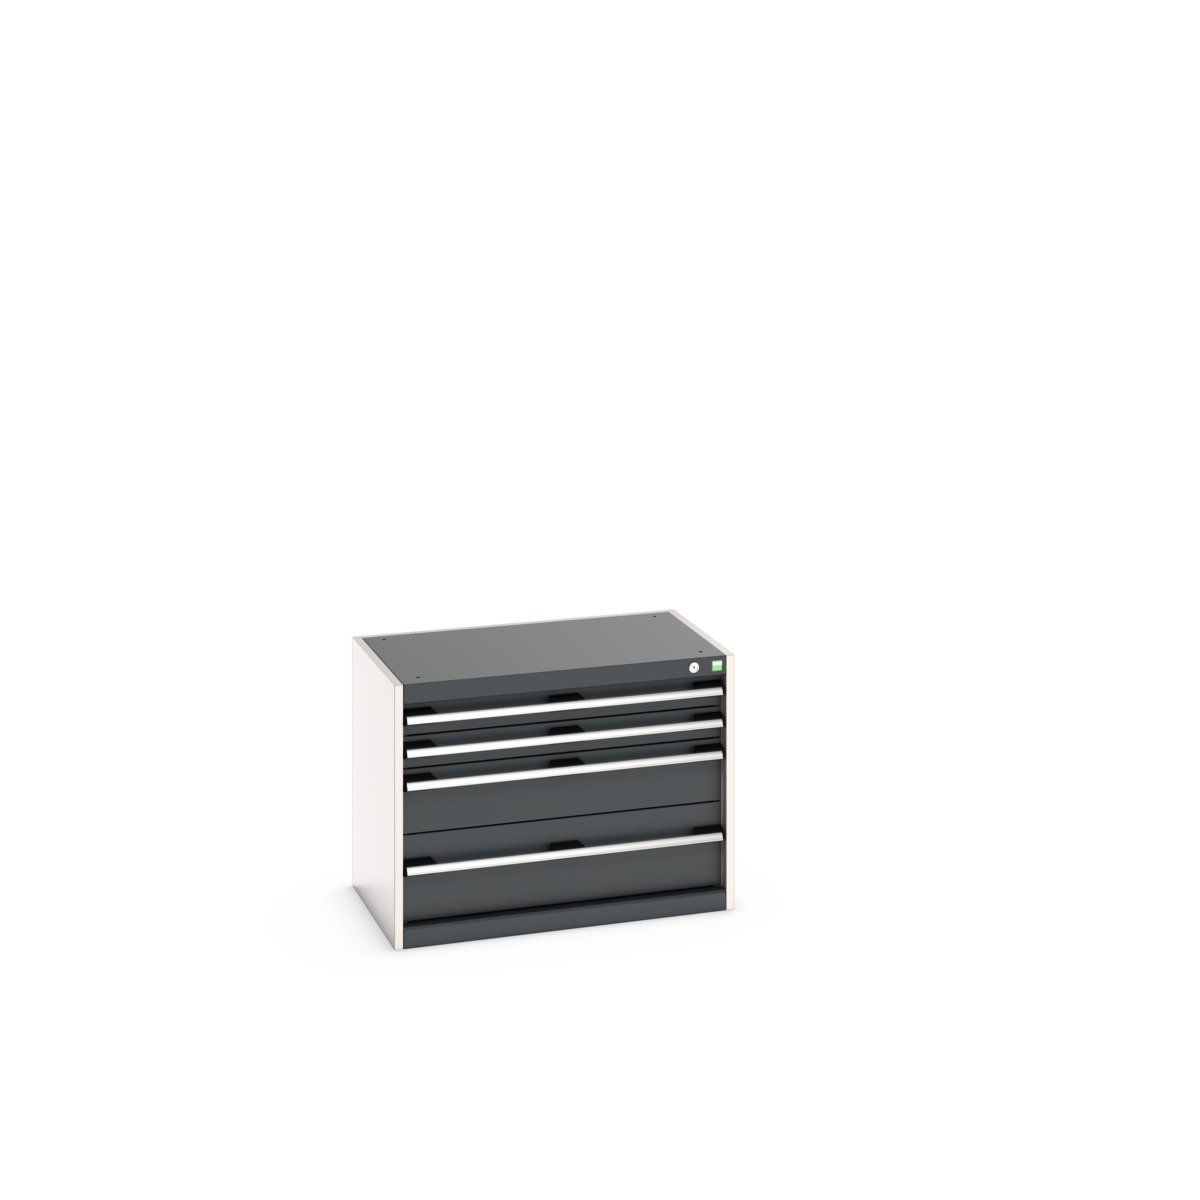 40012093. - cubio drawer cabinet